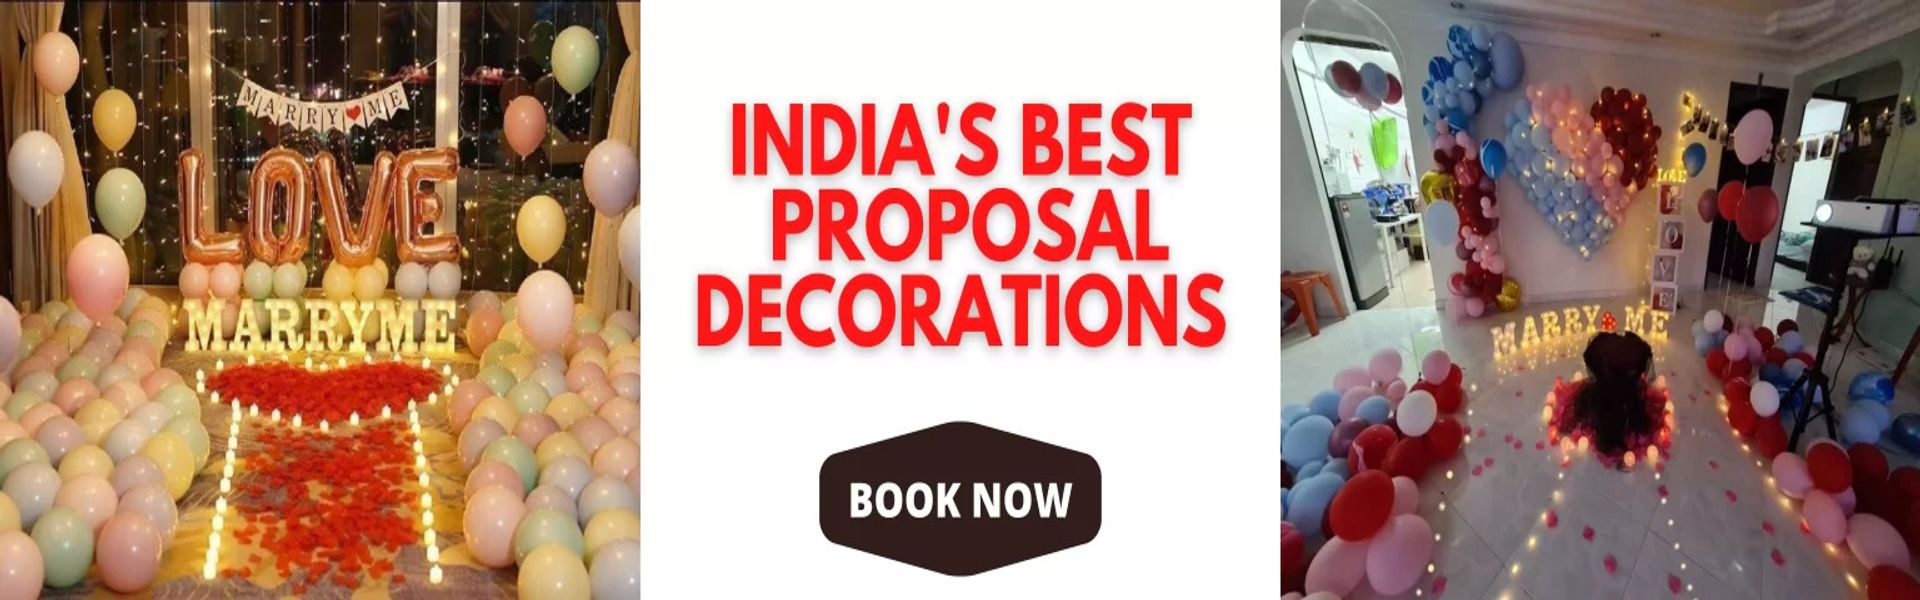 Proposal Decorations